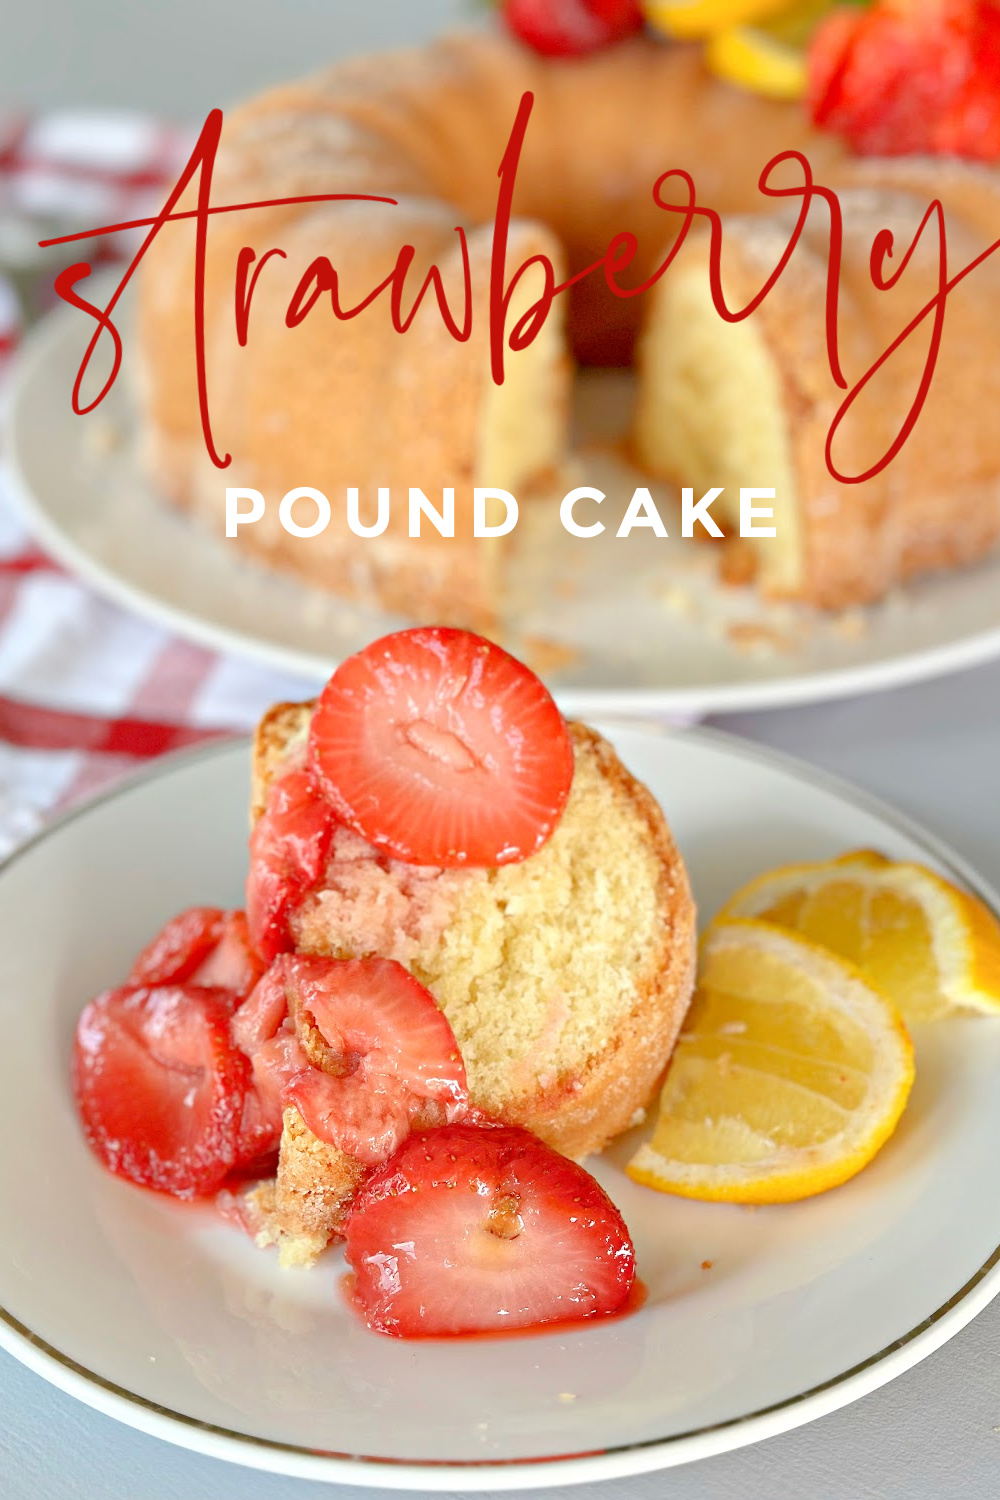 Strawberry Pound Cake #poundcake #strawberries #cakerecipe
#dessert 